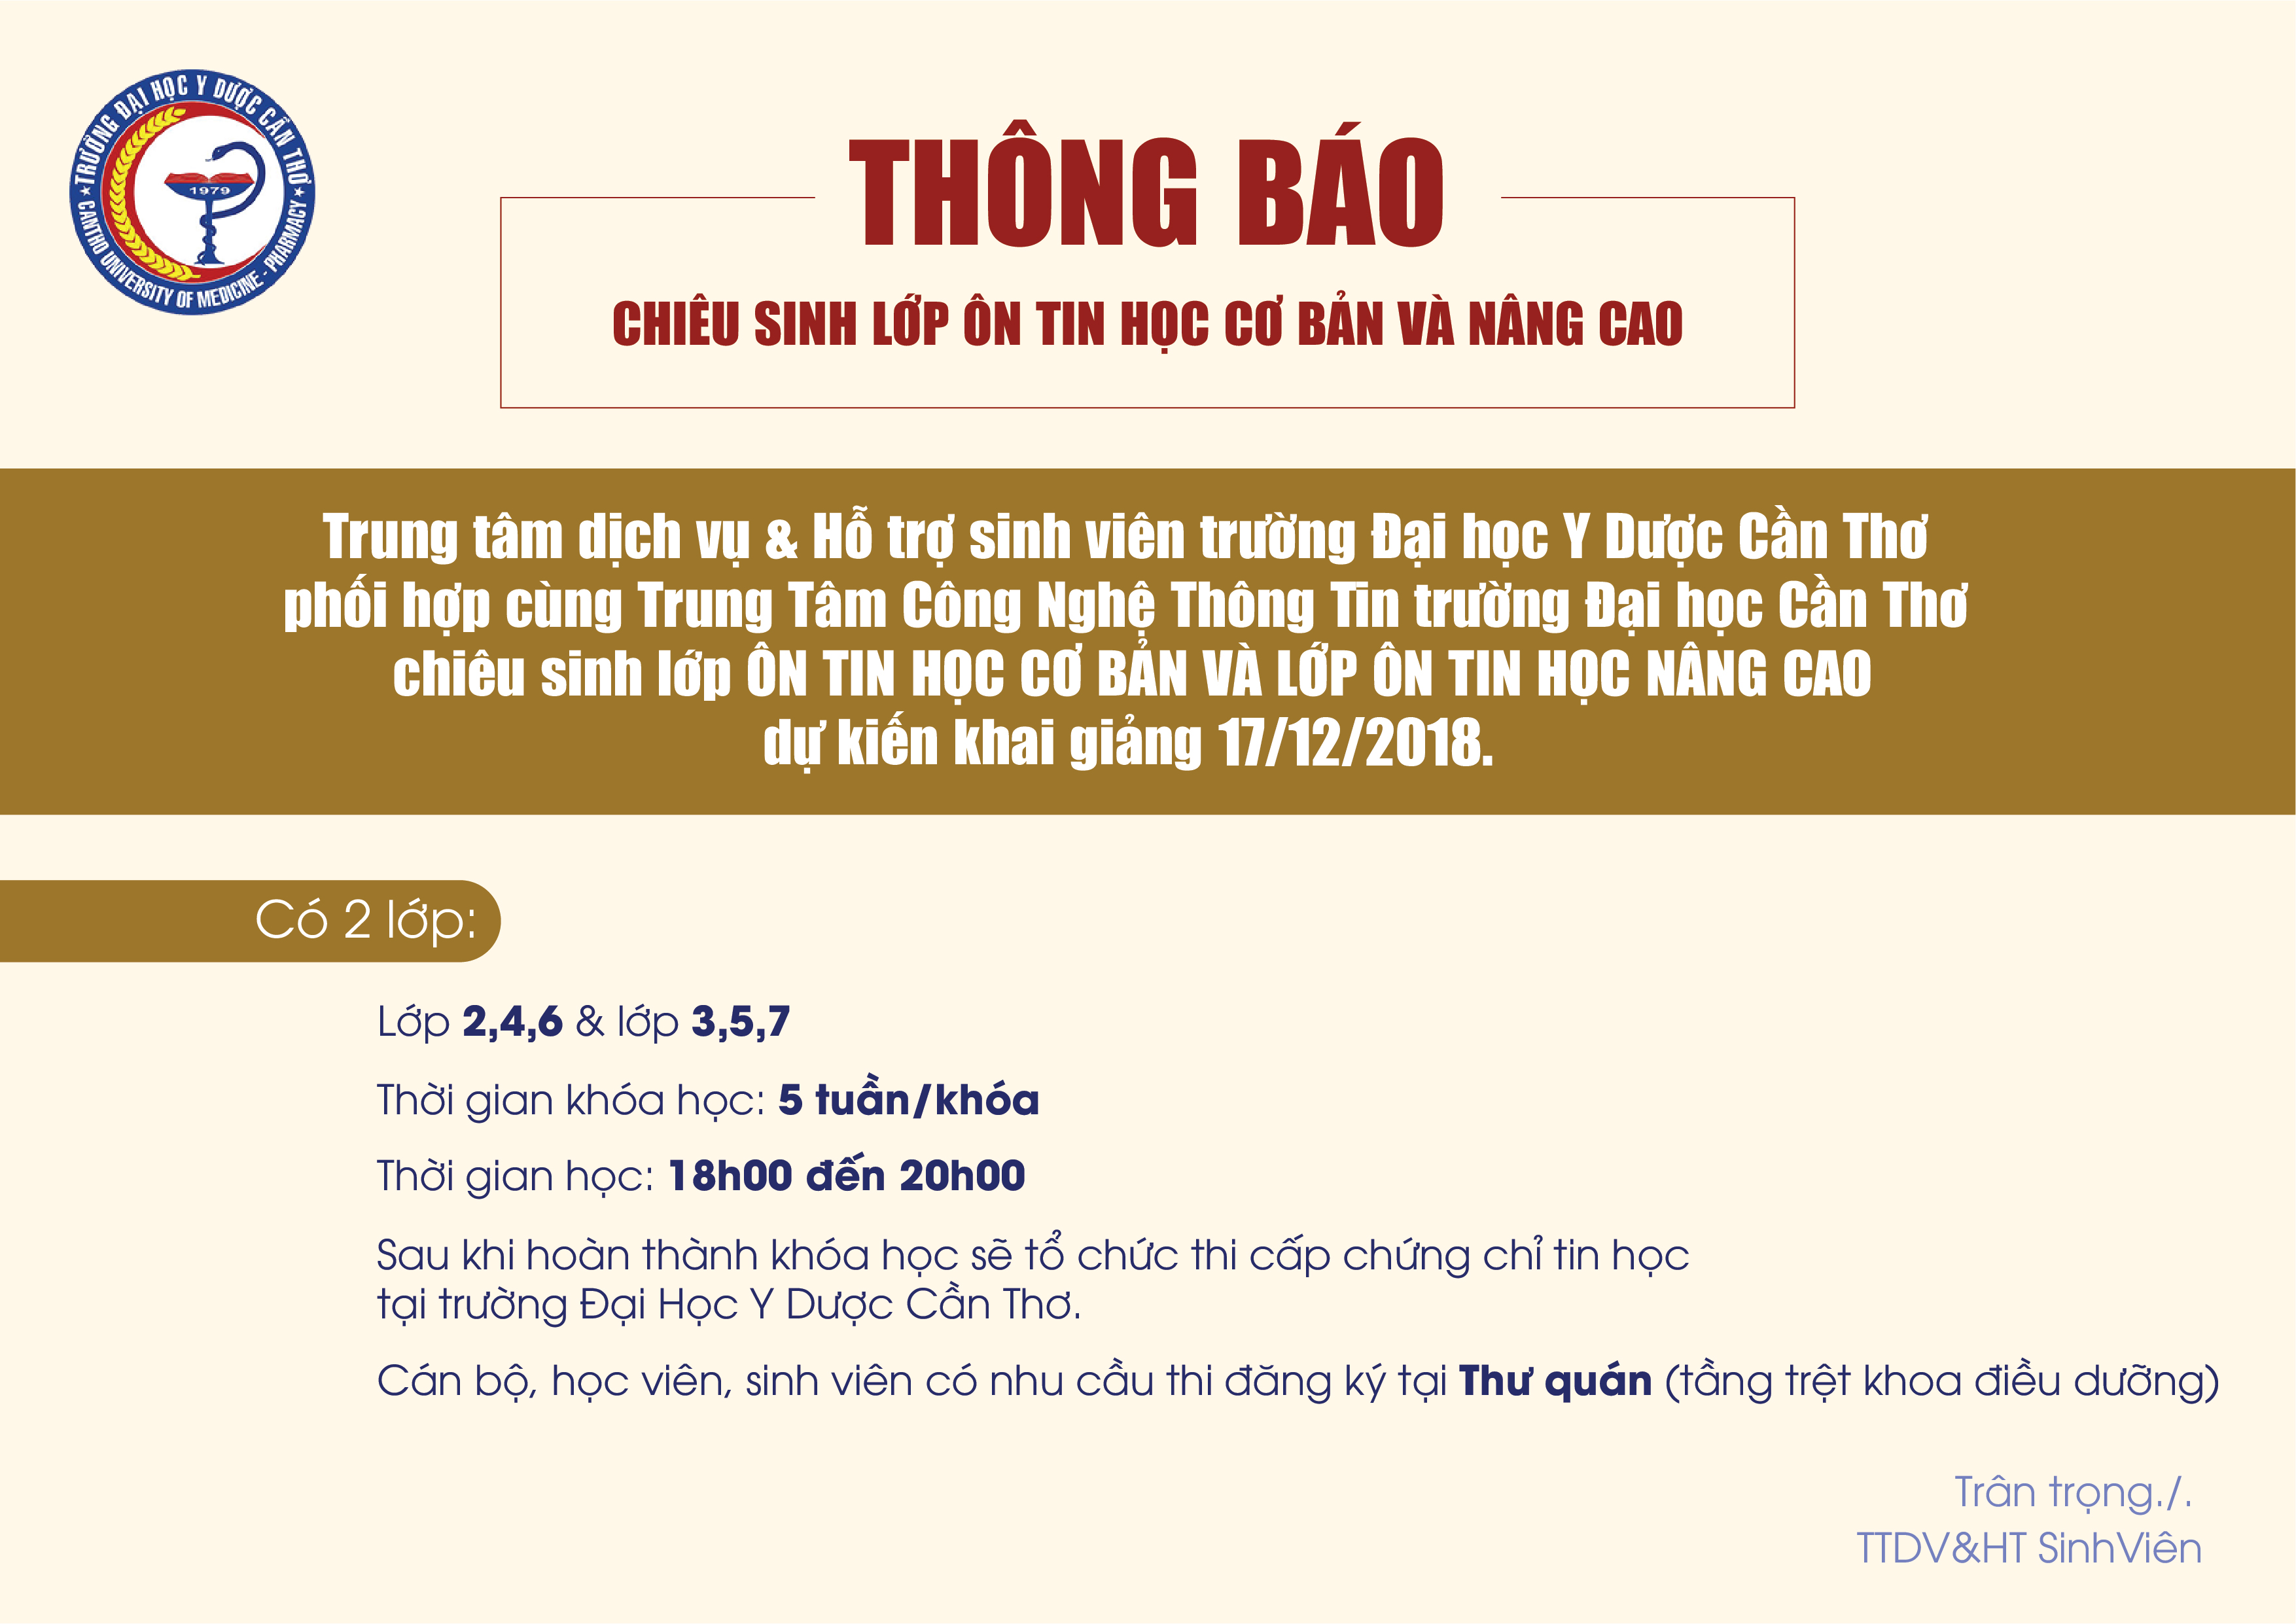 thong bao-01 tin hoc.jpg